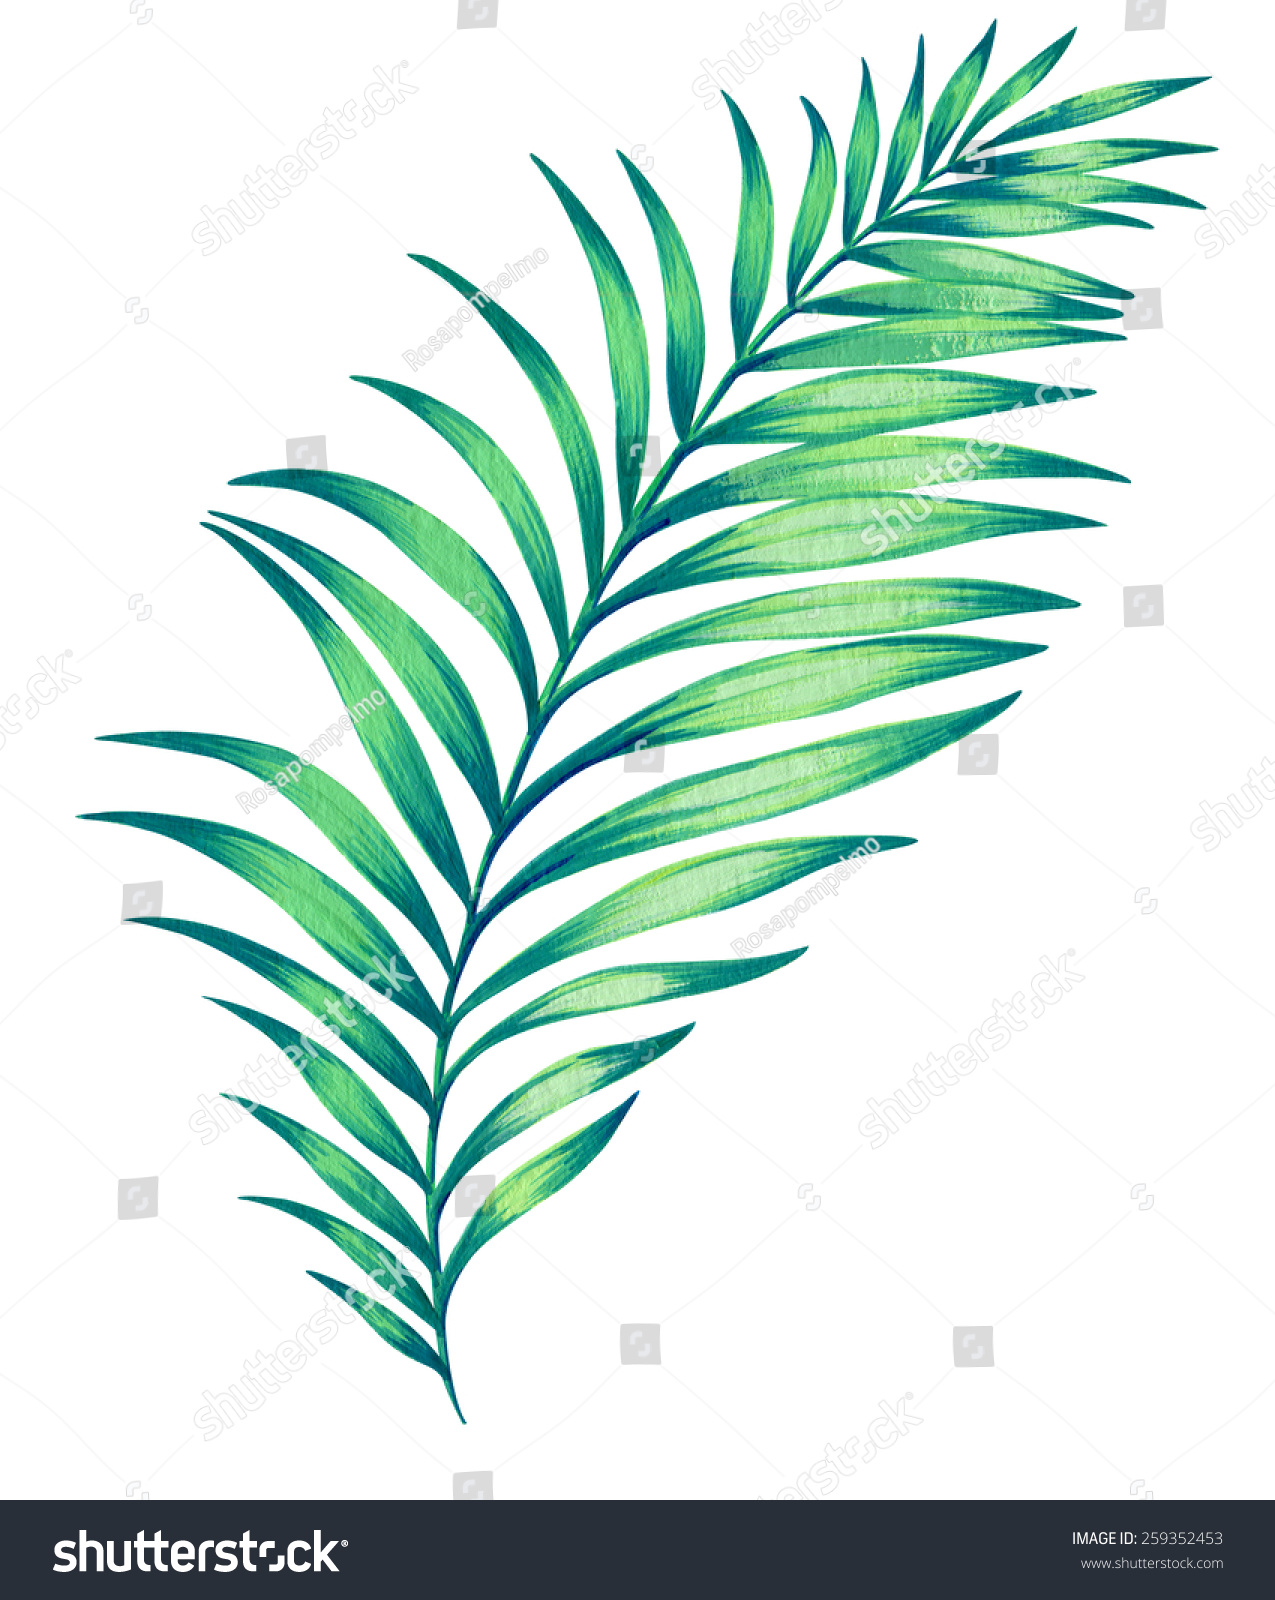 Large Illustrated Palm Leaf. Hand Drawn Illustration, Isolated On White